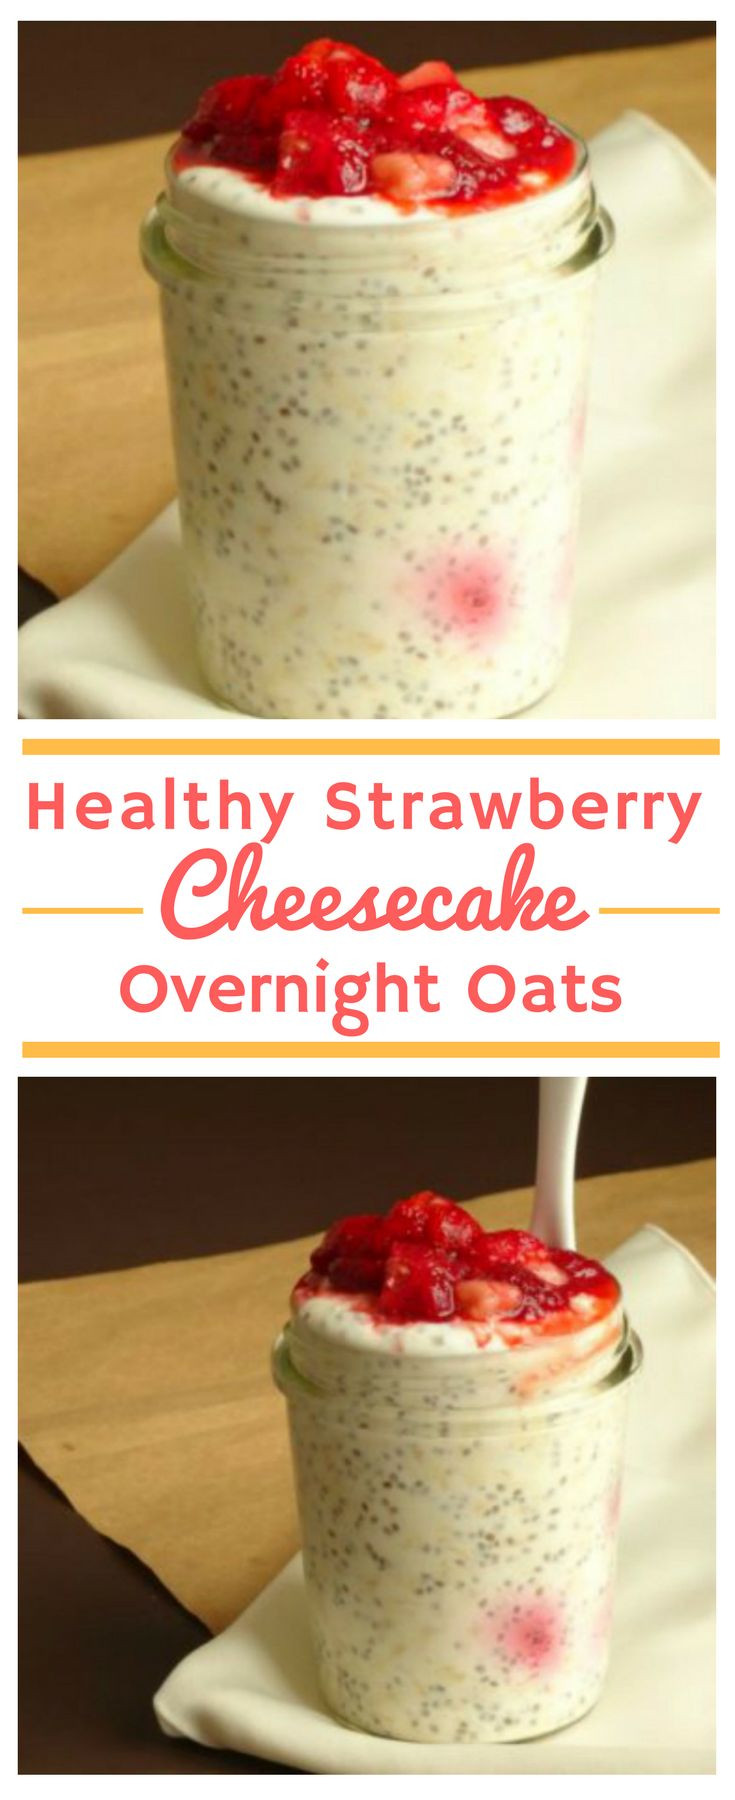 Healthy Overnight Oats Recipes
 Best 25 Healthy overnight oats ideas on Pinterest